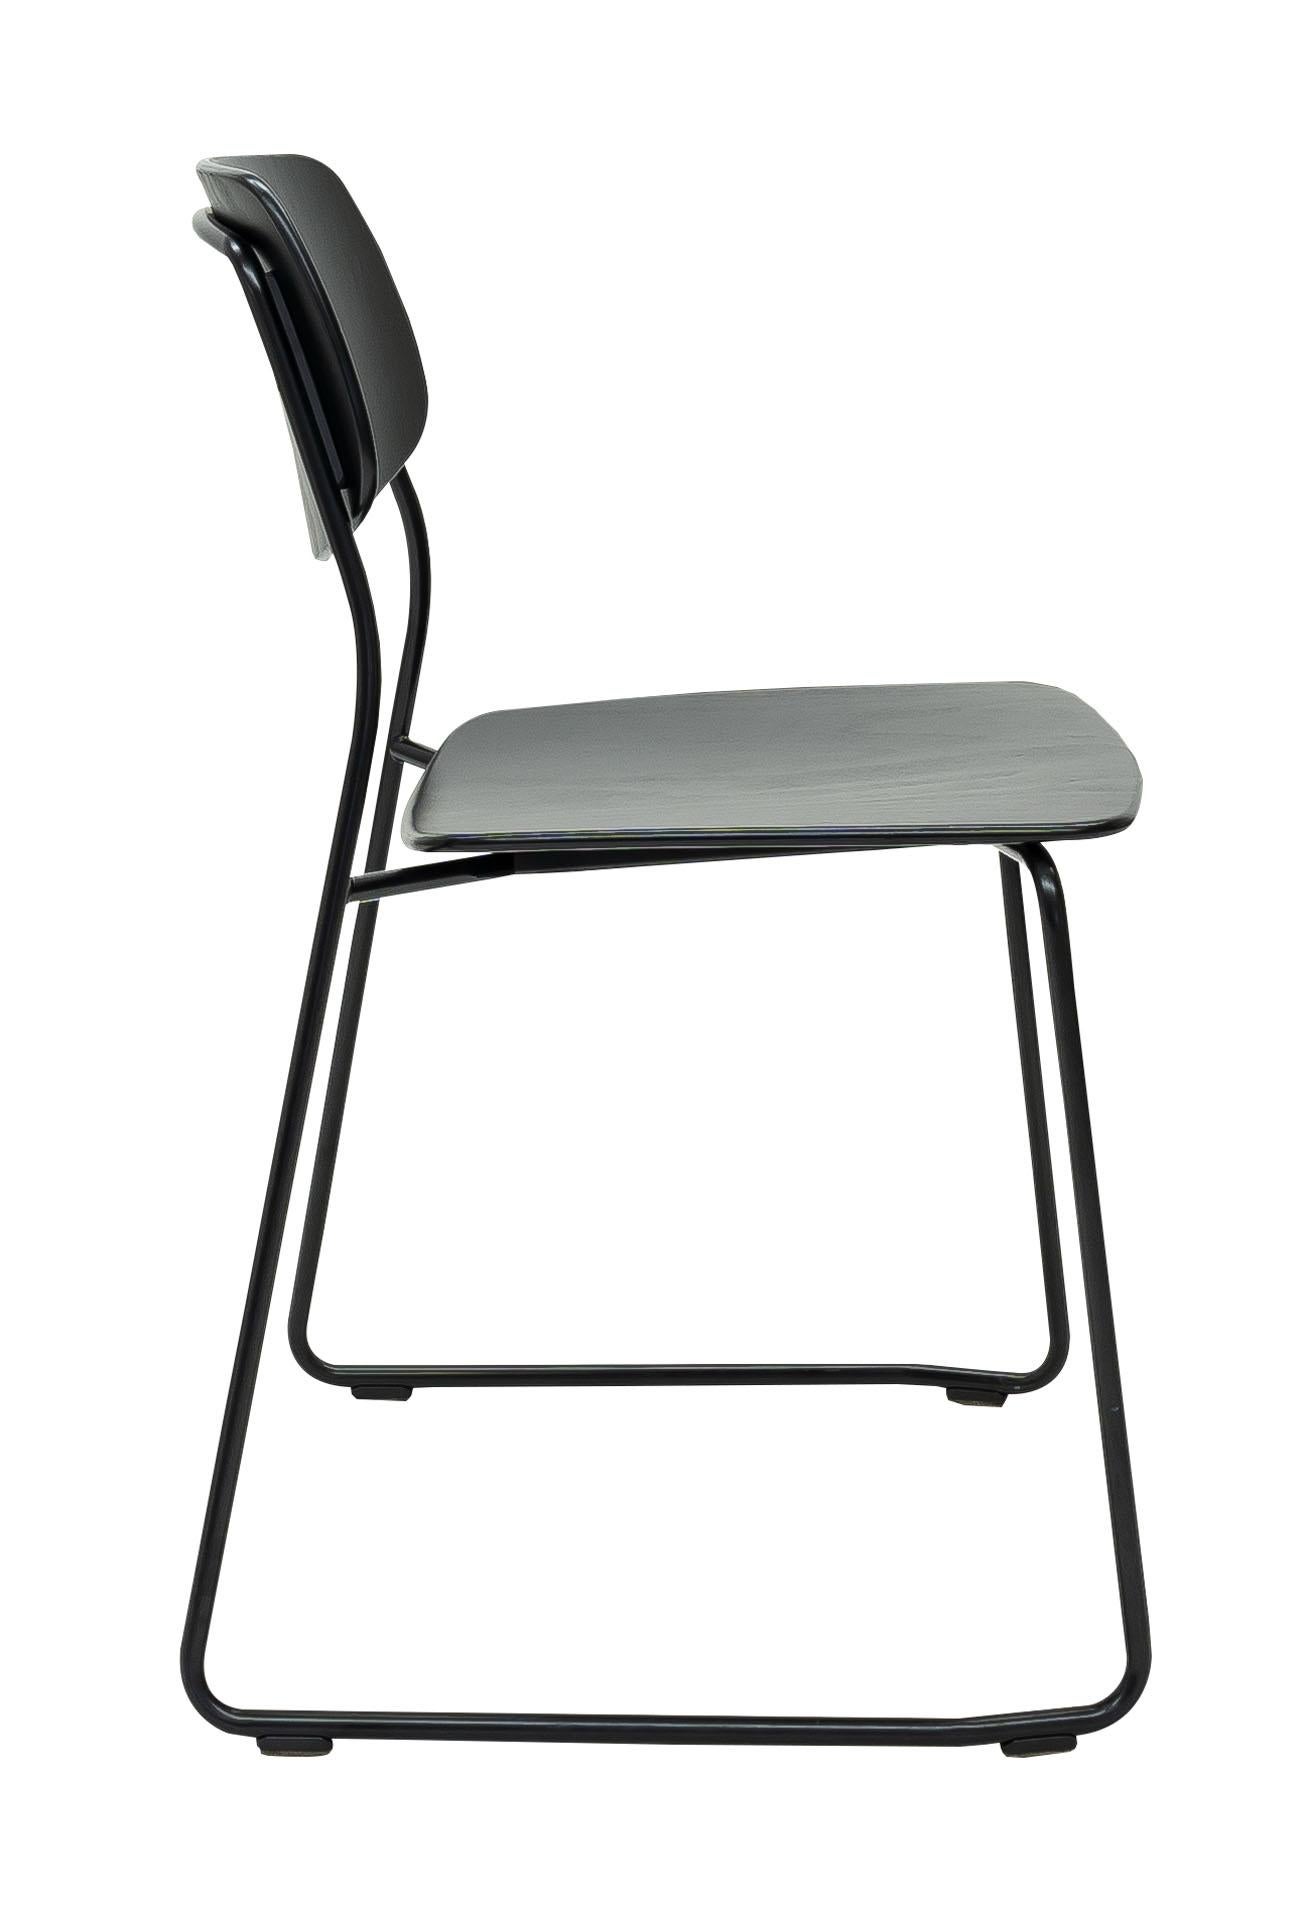 Swiss Dietiker Felber C14 Sled Modern Dining Chair, Modular Design, Set of 2 For Sale